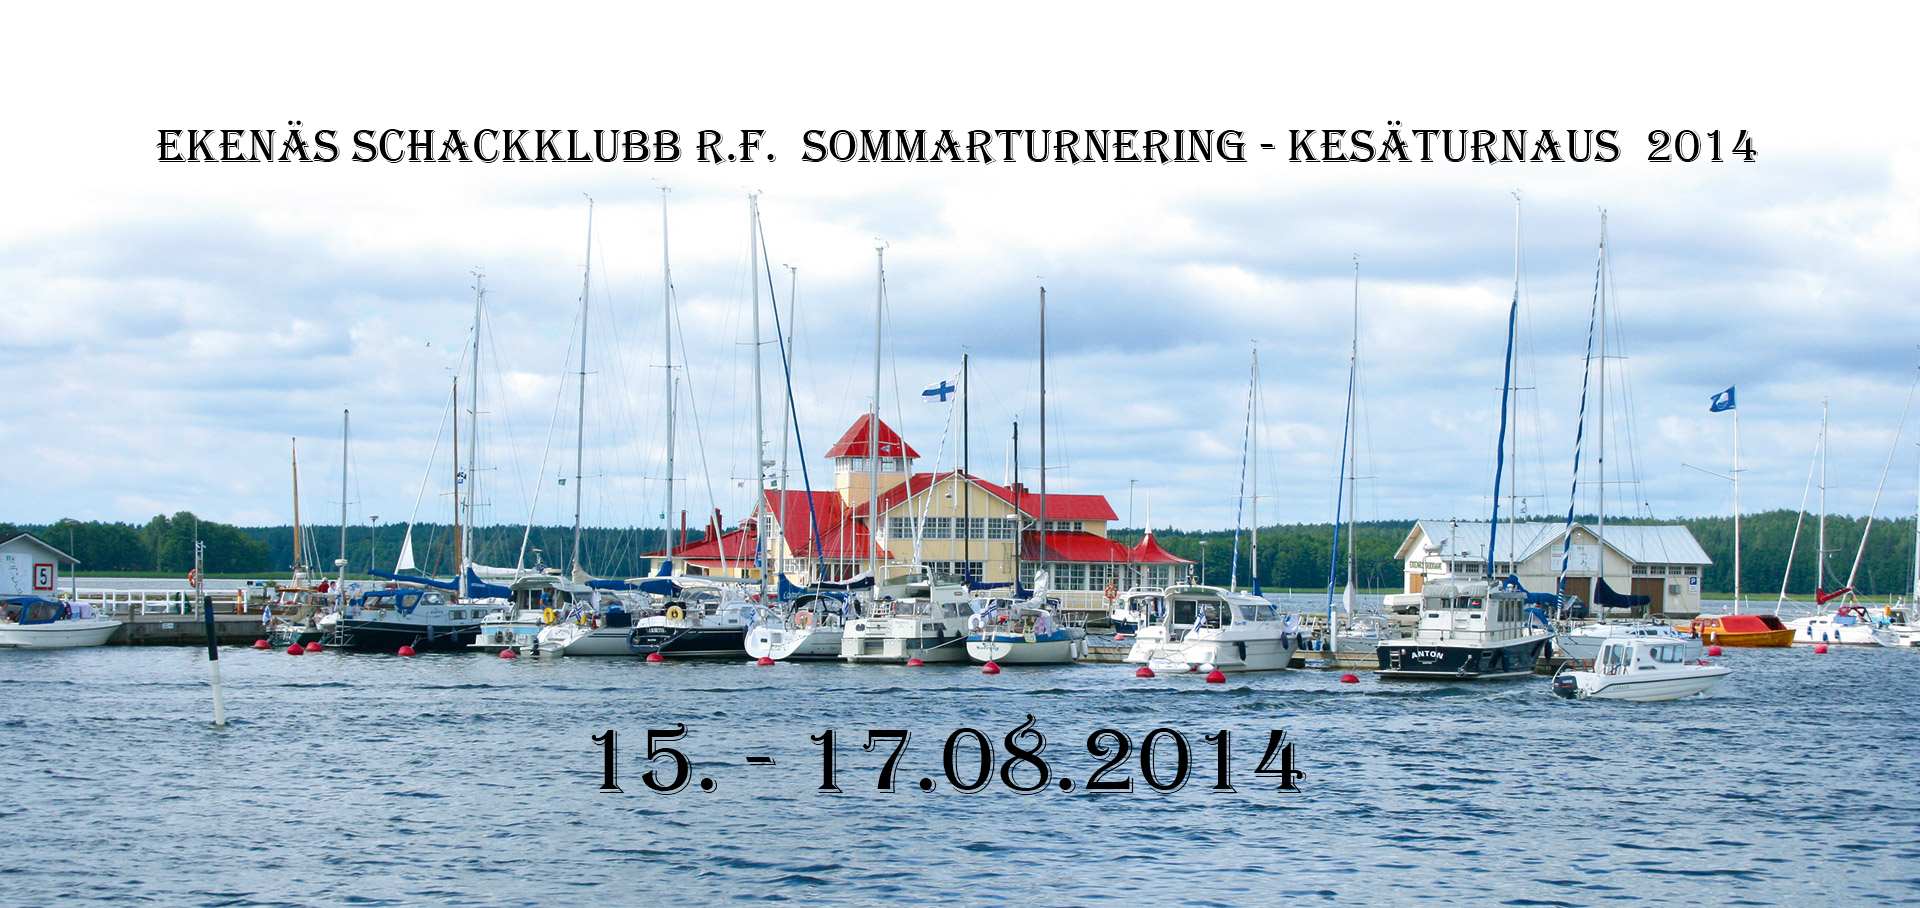 Ekenäs Schackklubb Sommarturnering - Kesäturnaus 2014